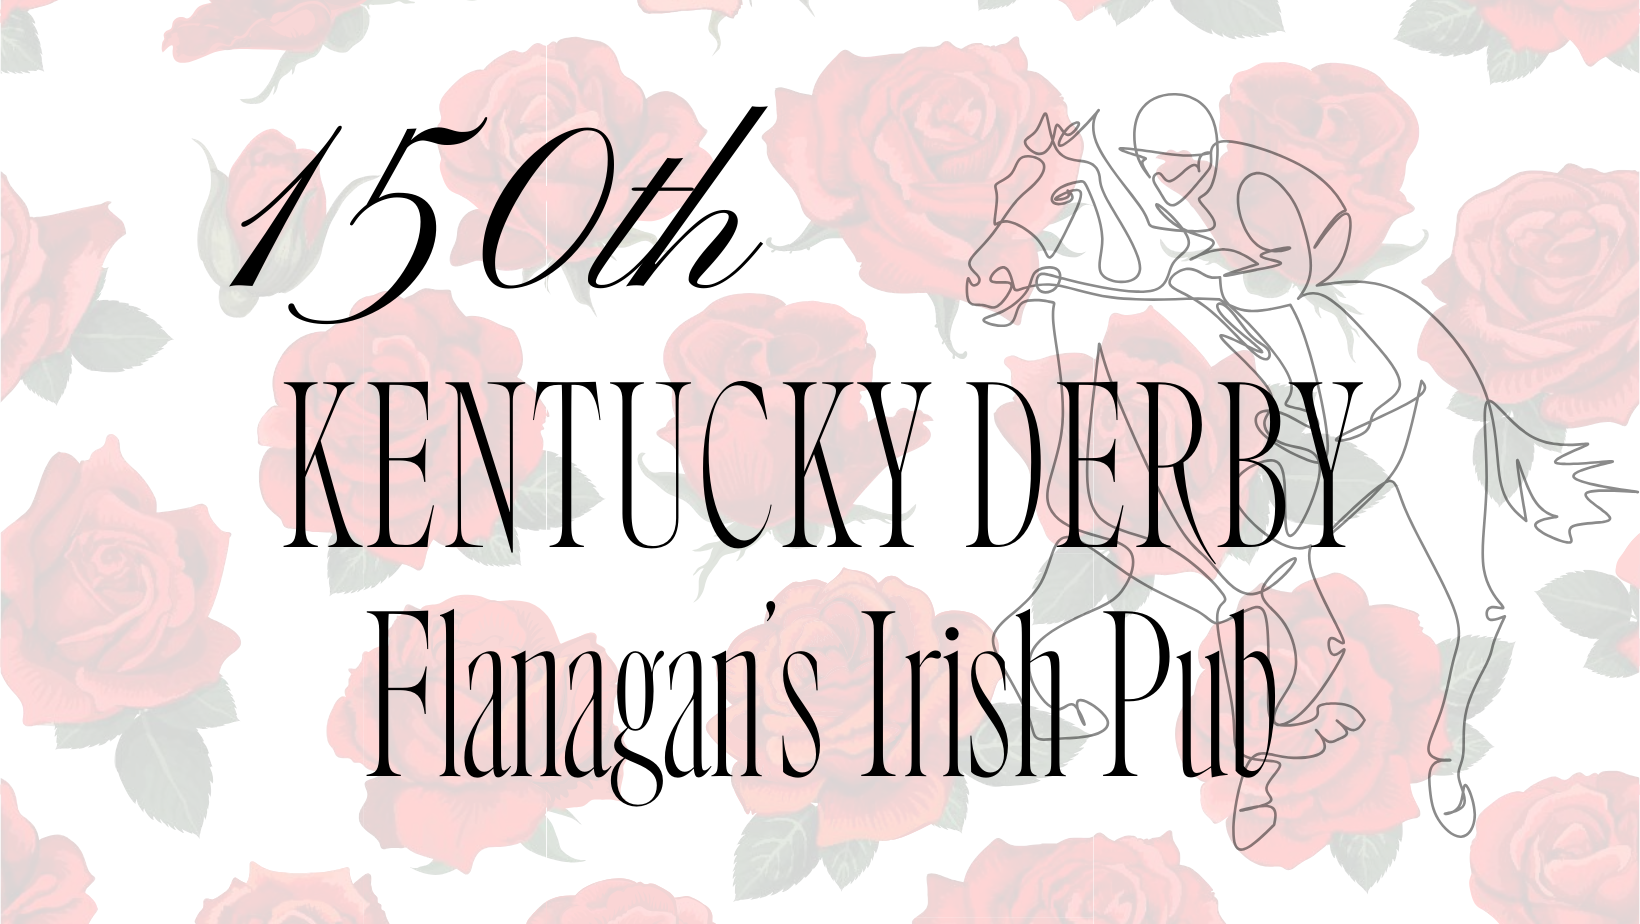 Kentucky Derby @ Flanagan’s Irish Pub